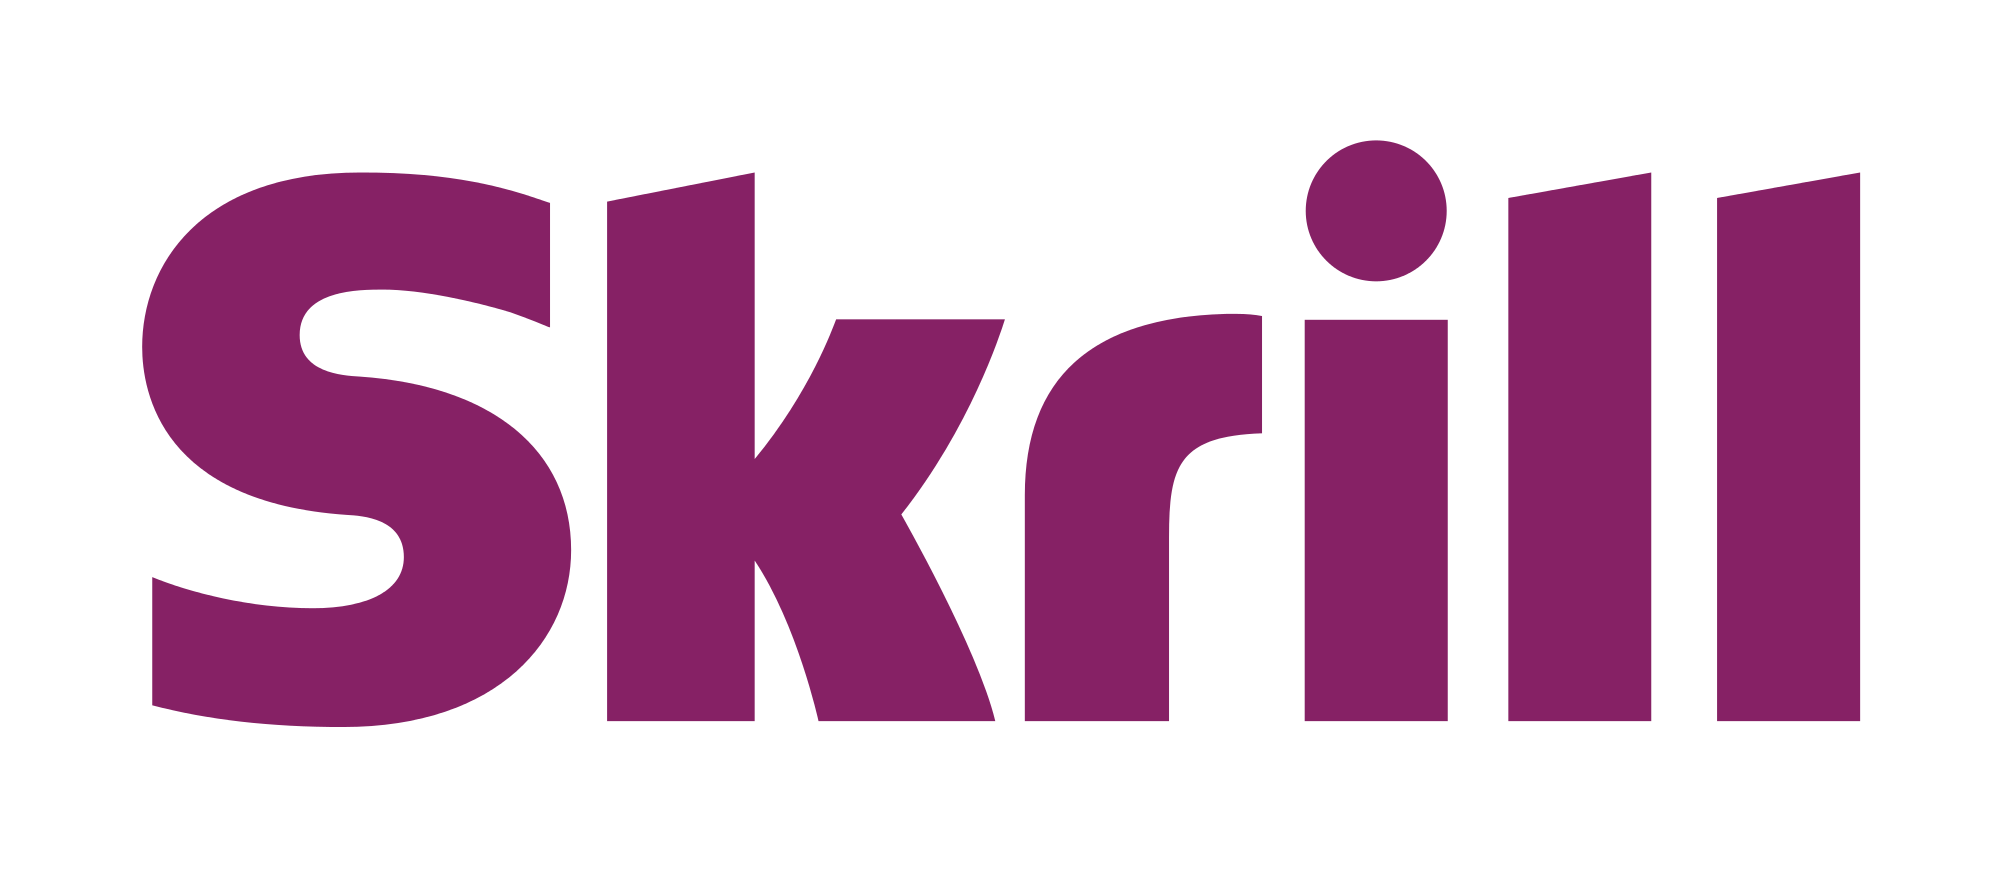 skrill_primary_logo_rgb-svg